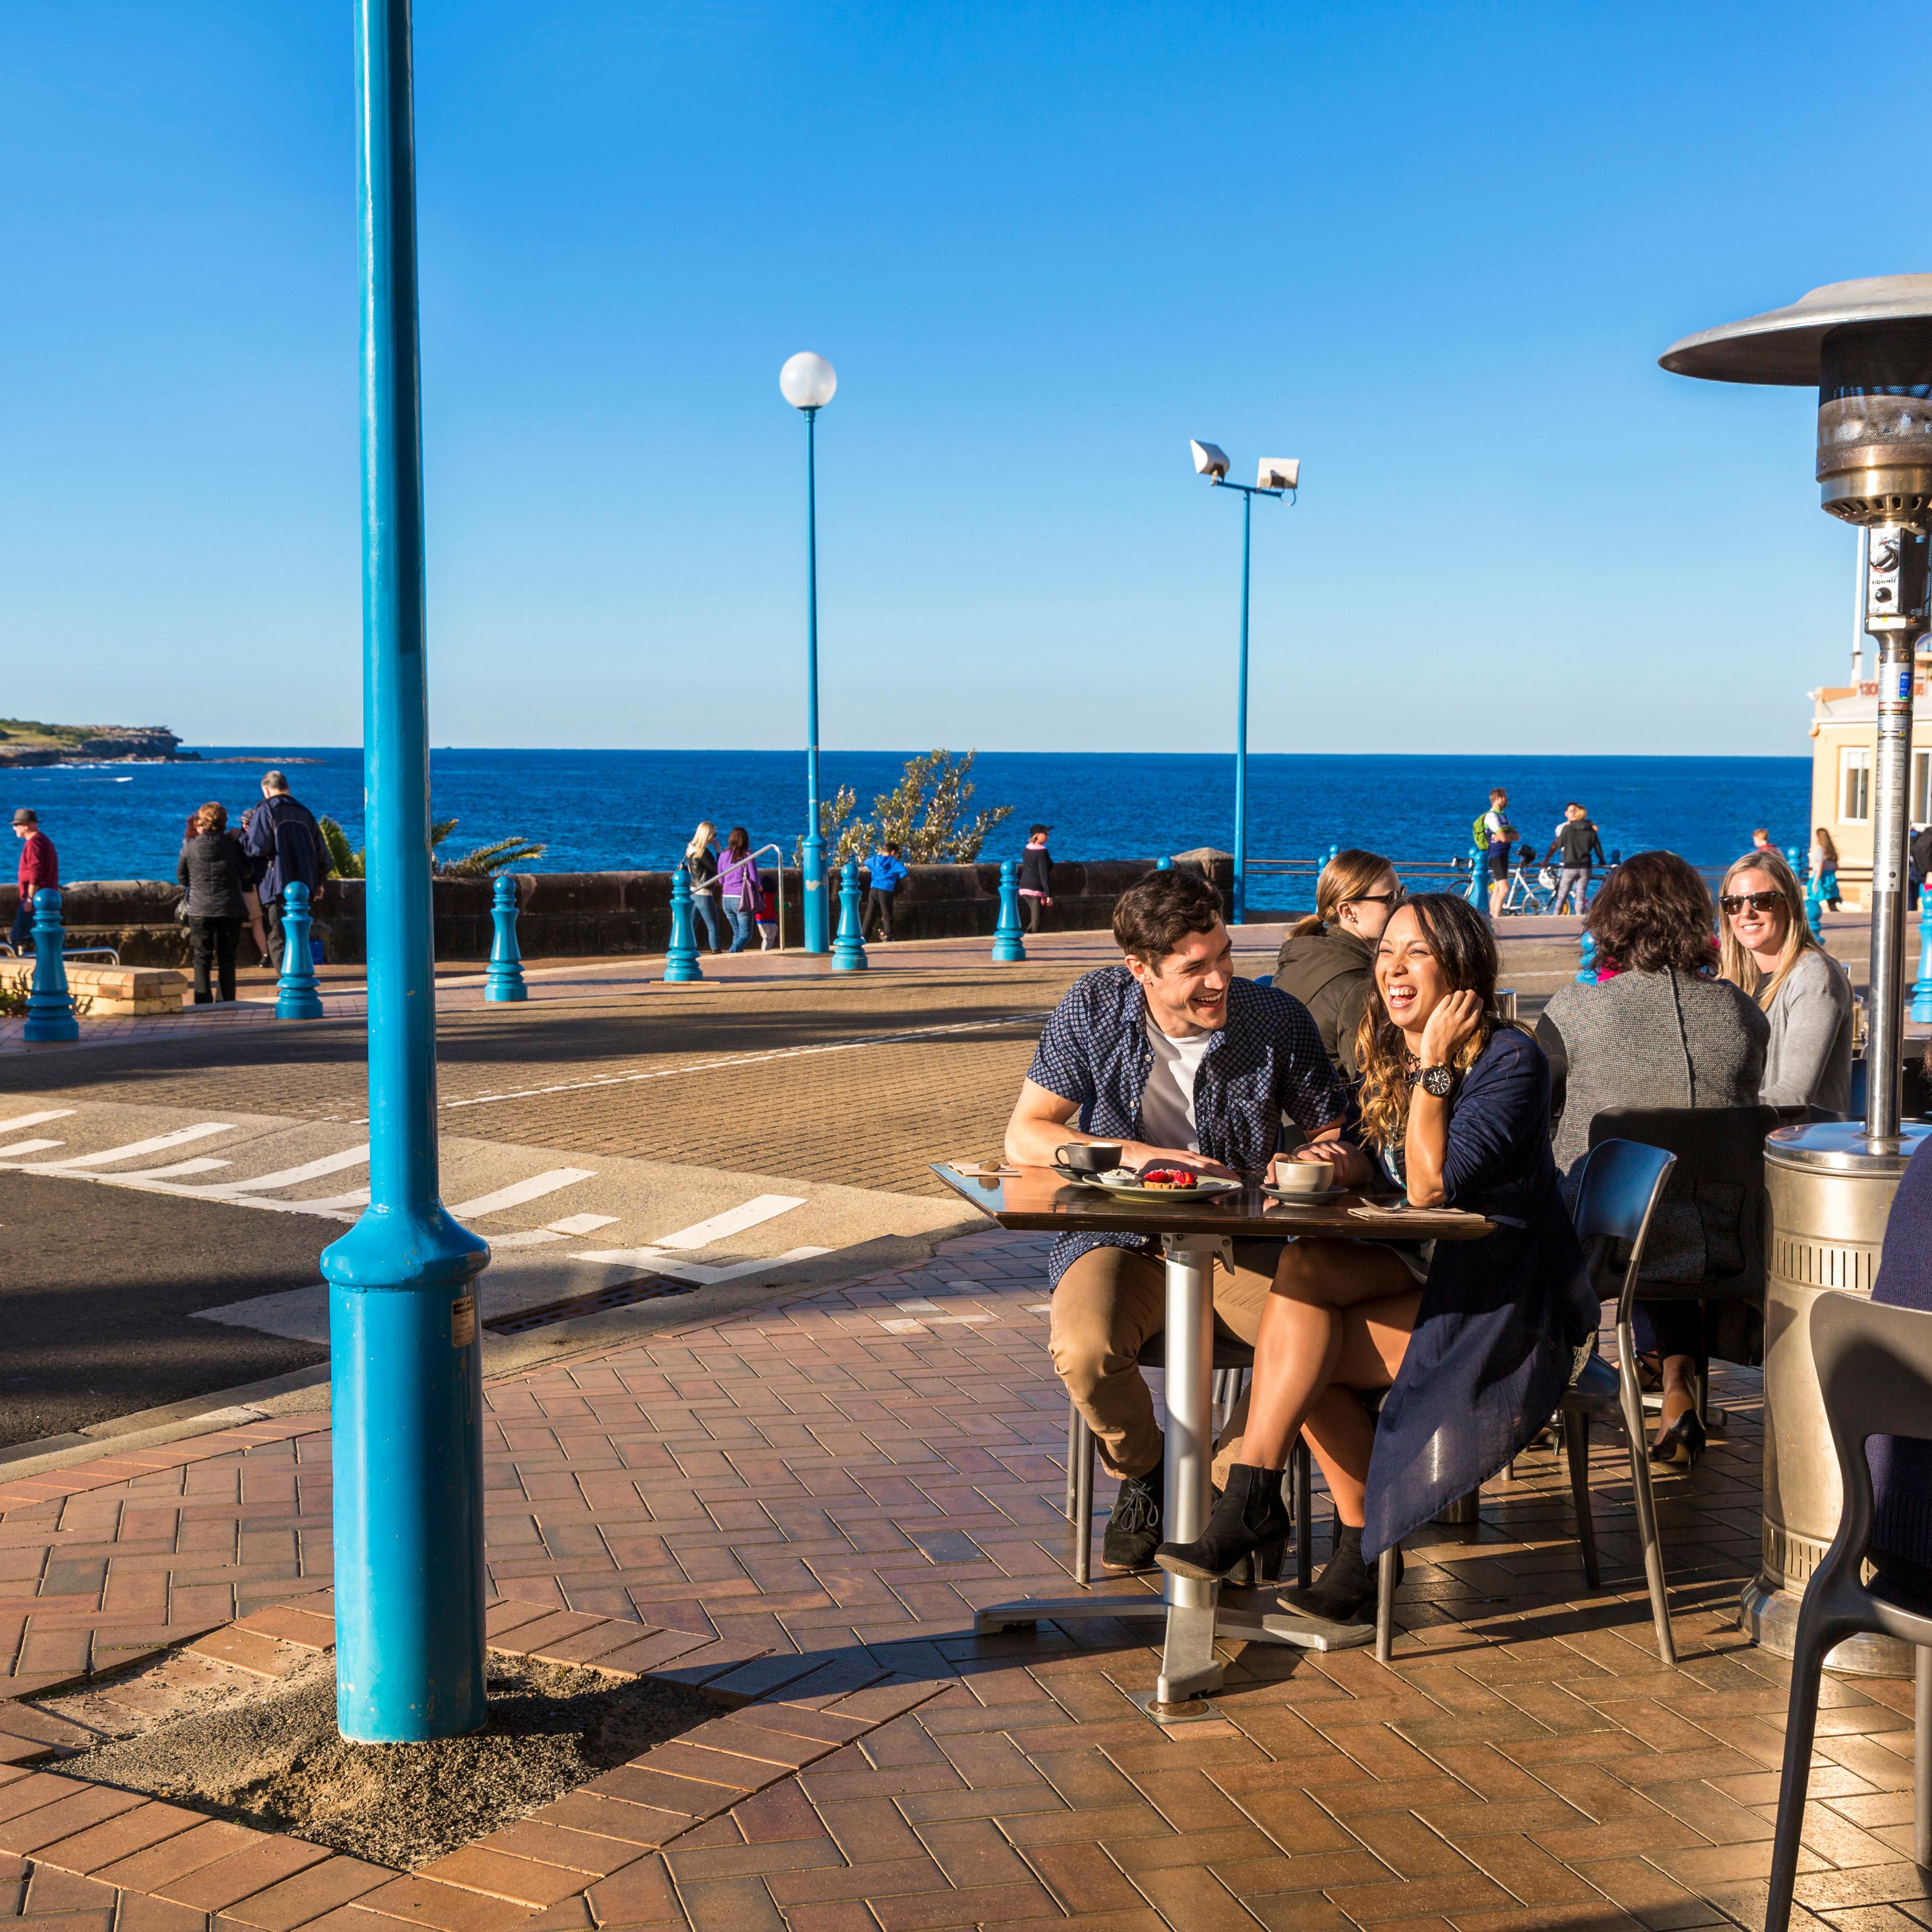 Beachside coffee shop with views of Coogee Beach